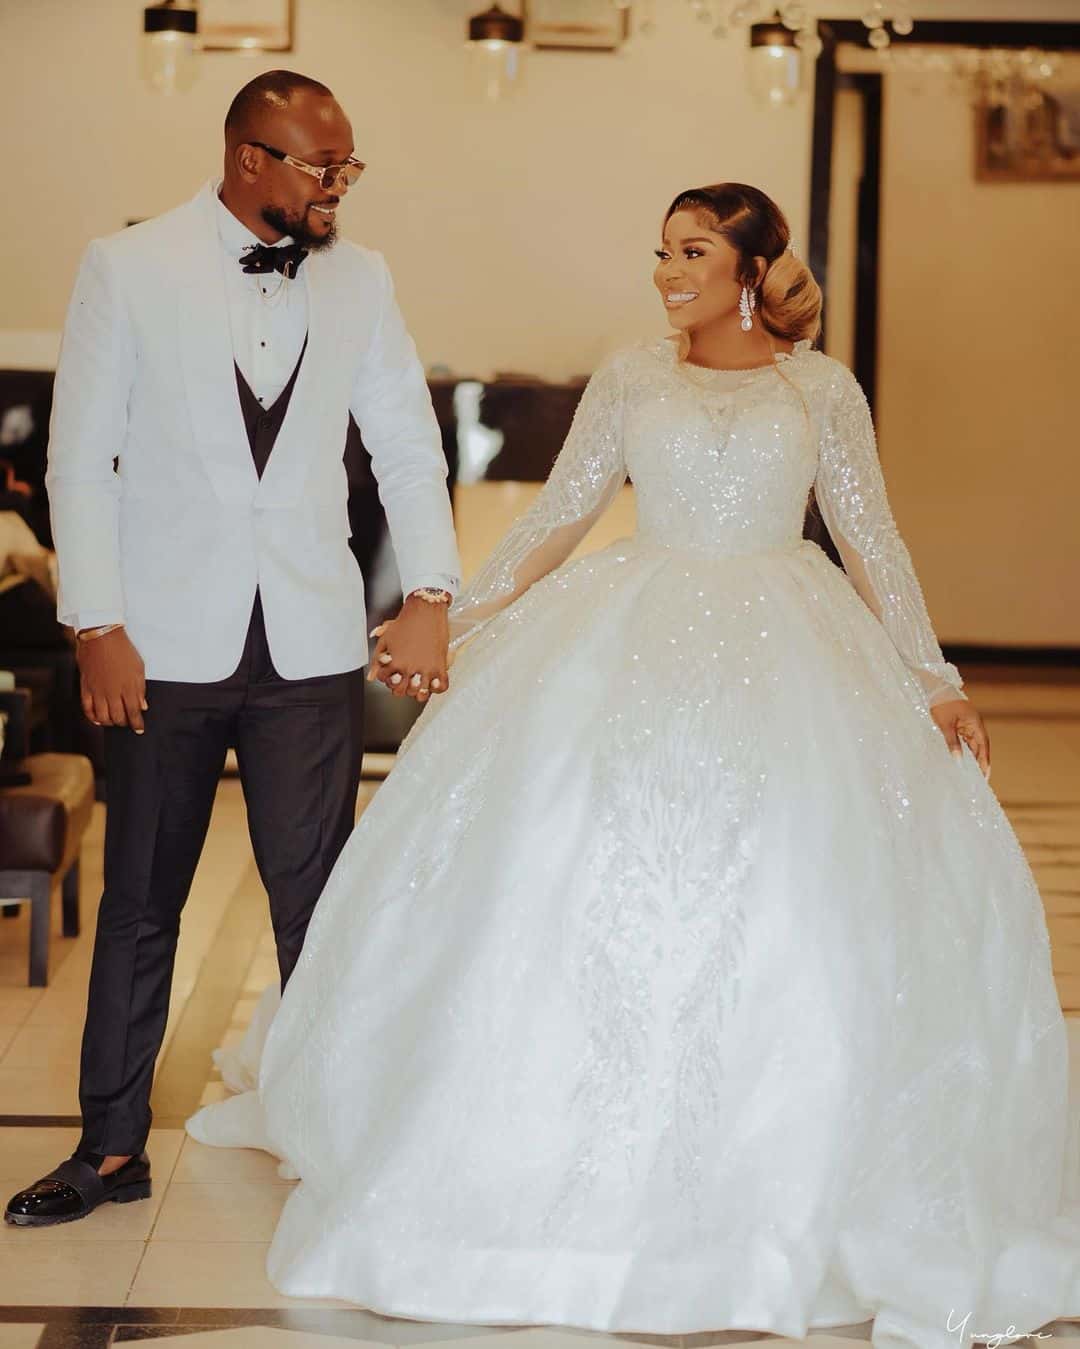 Rent buy custom order luxury bridal accessories wedding gowns bridal dresses Lagos Nigeria.